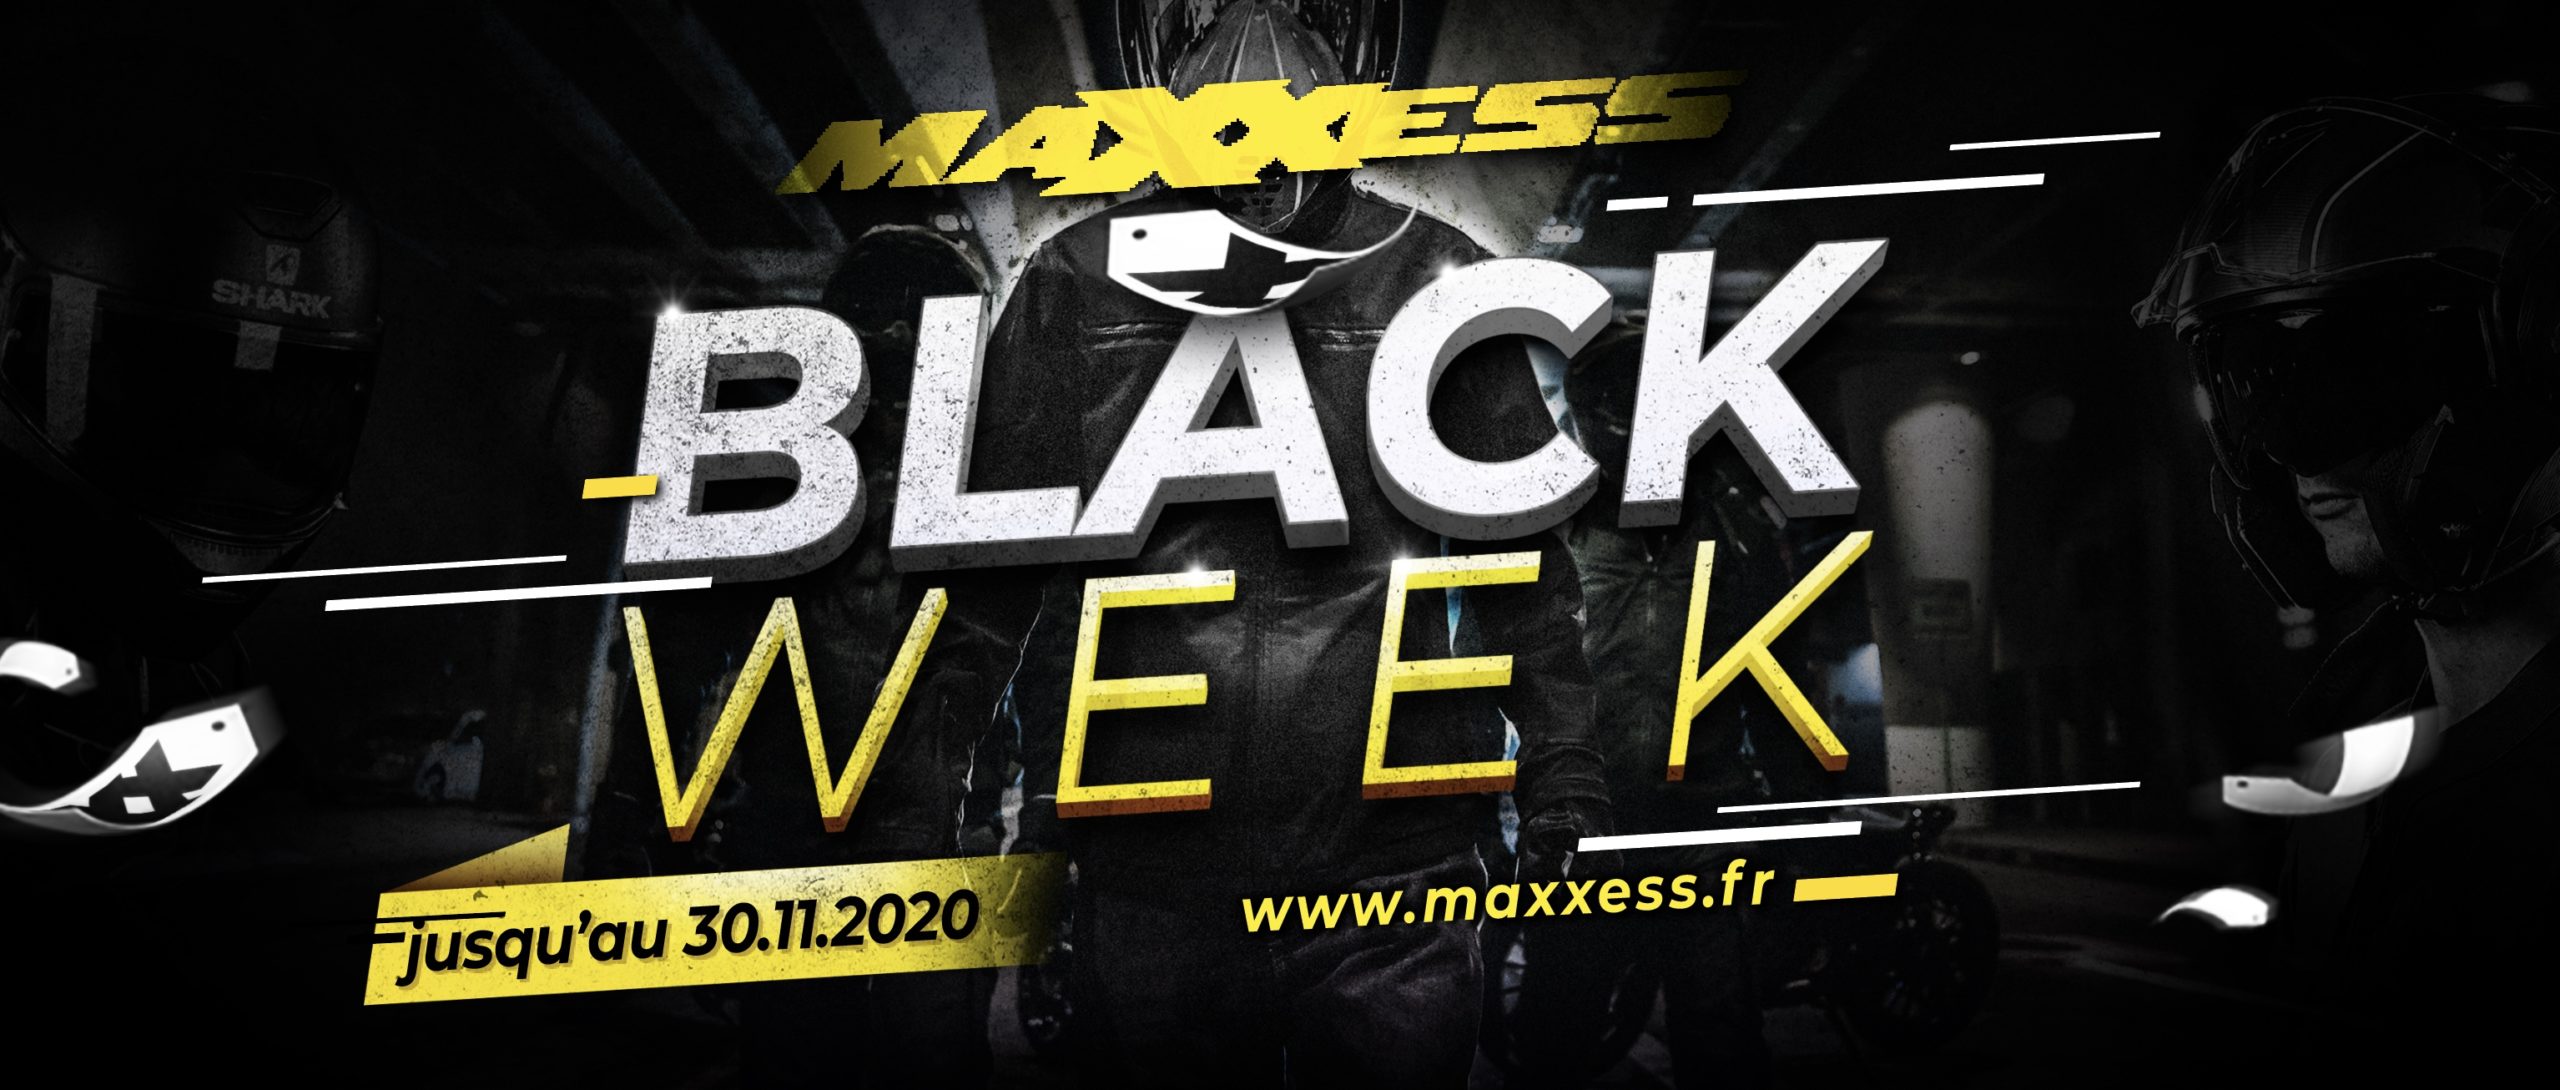 BLACK WEEK MAXXESS